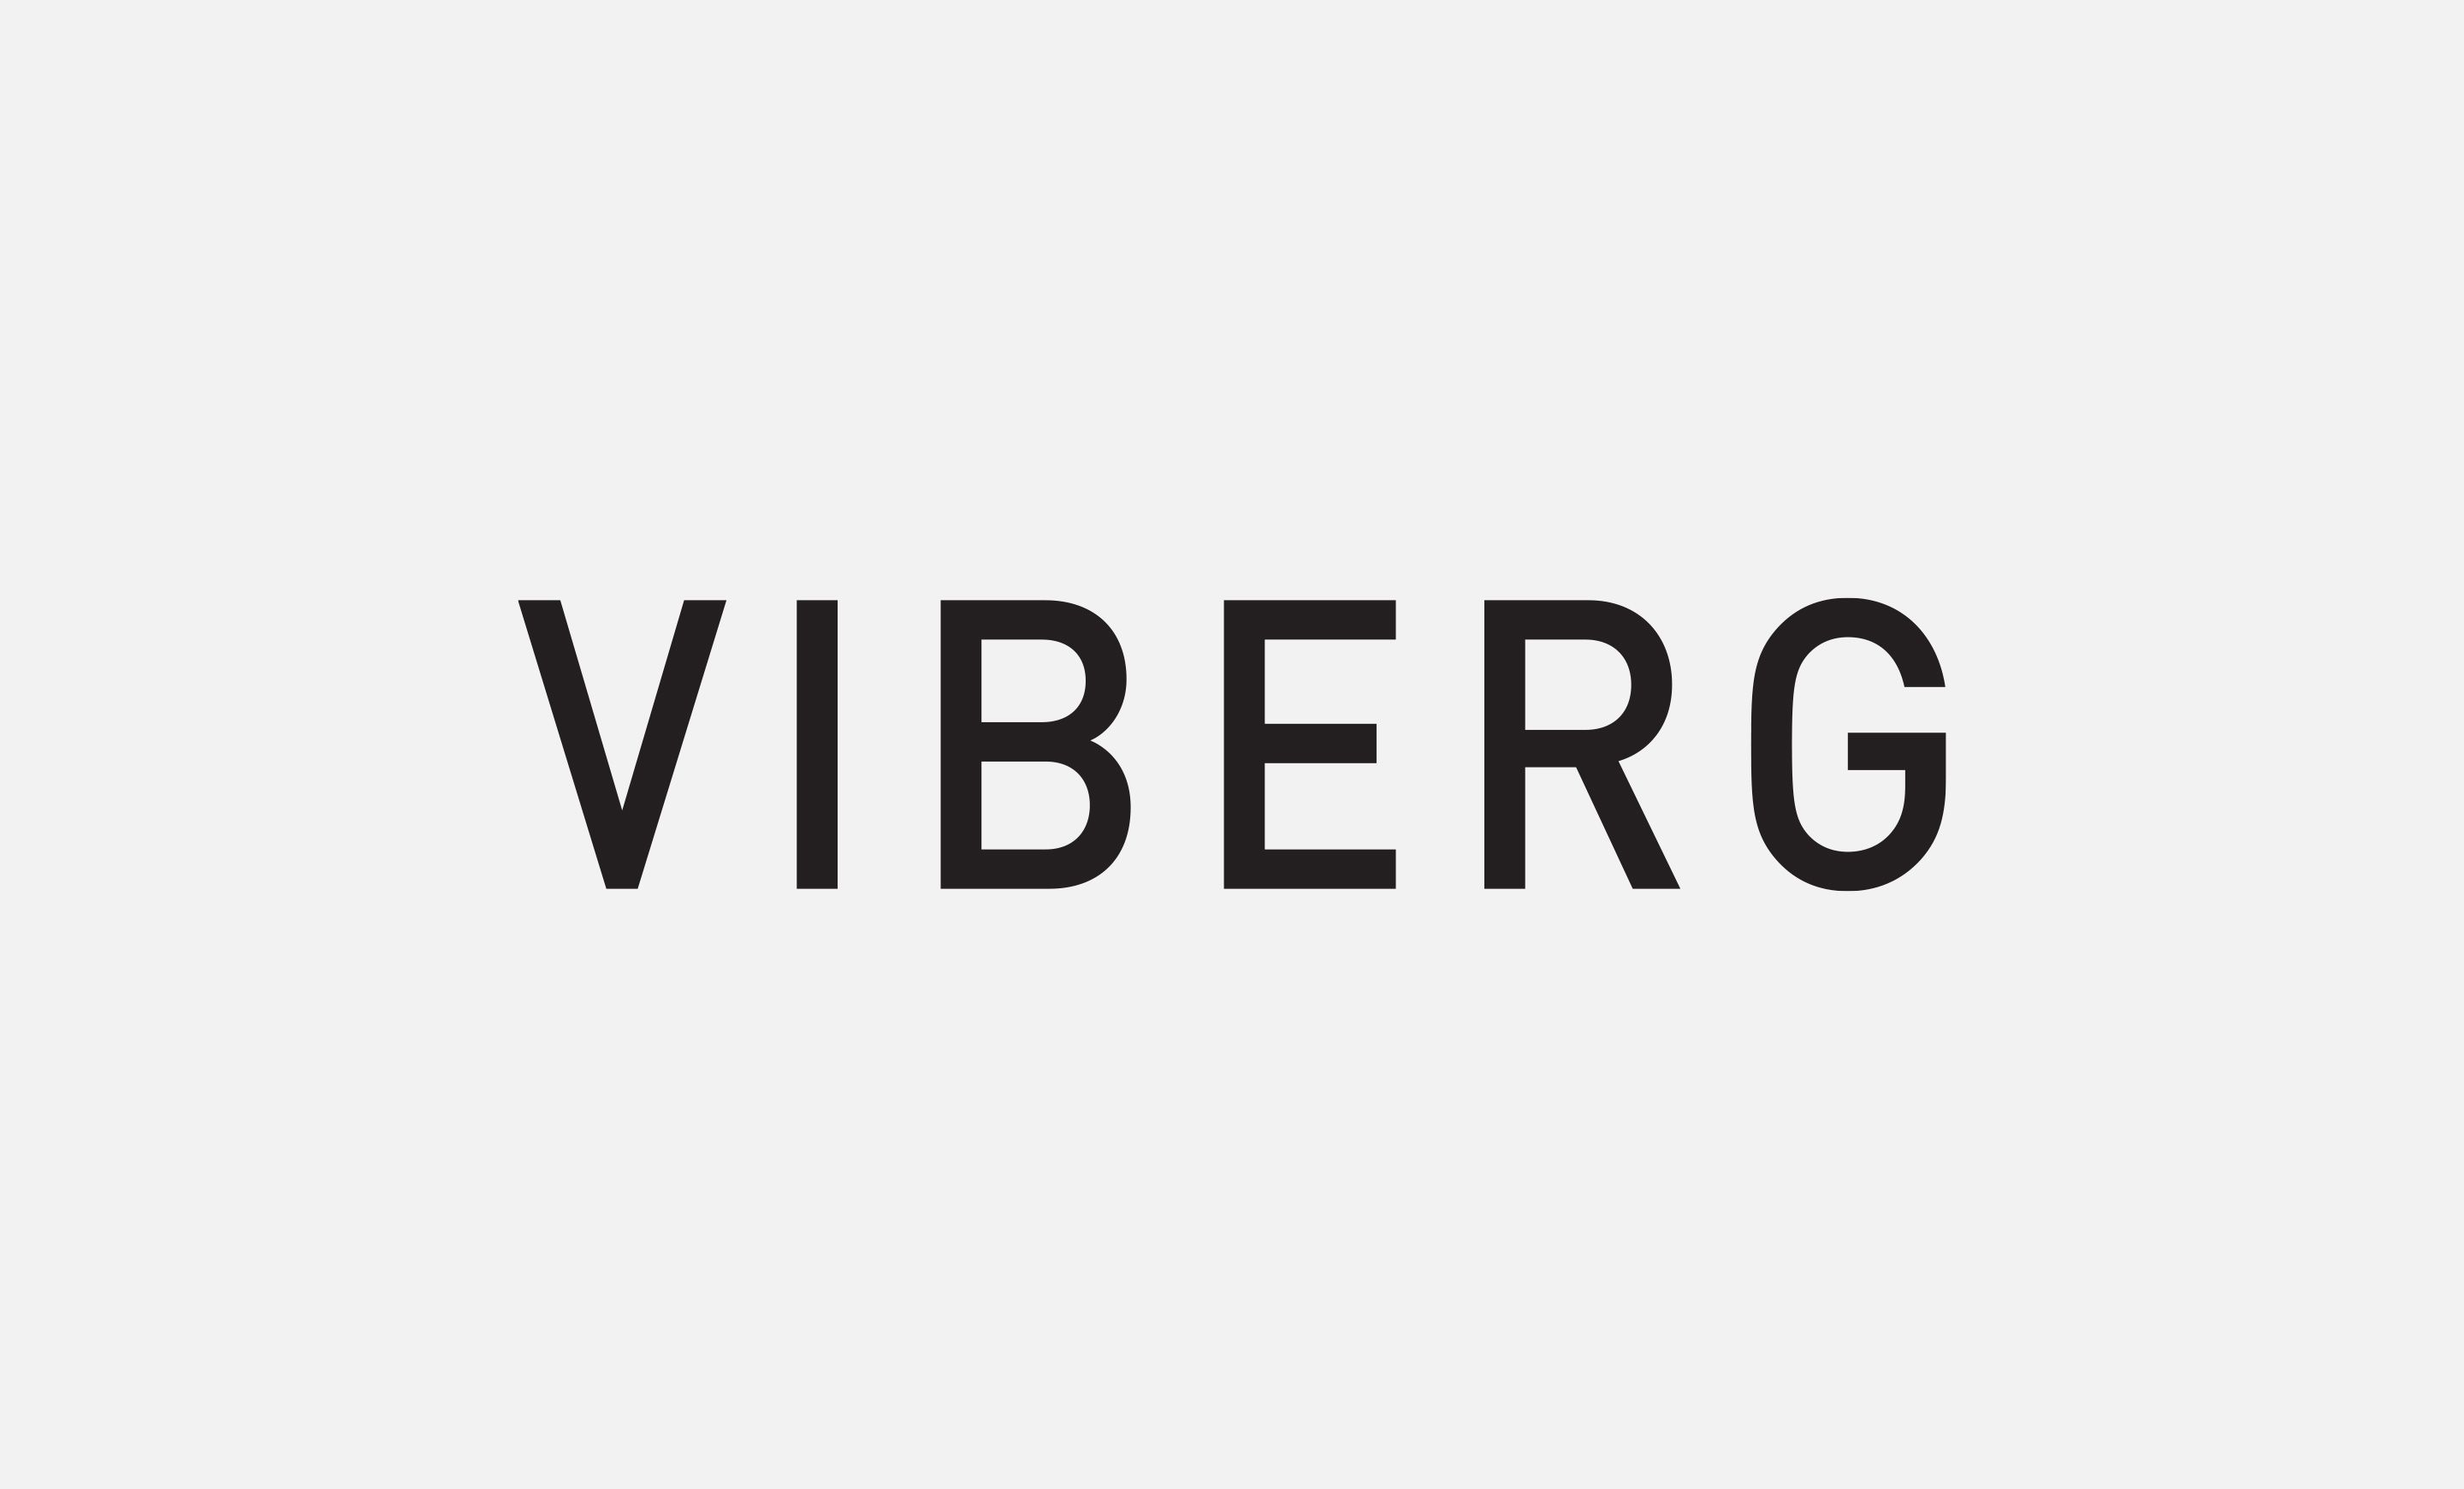 Viberg_Brand_Logo_1